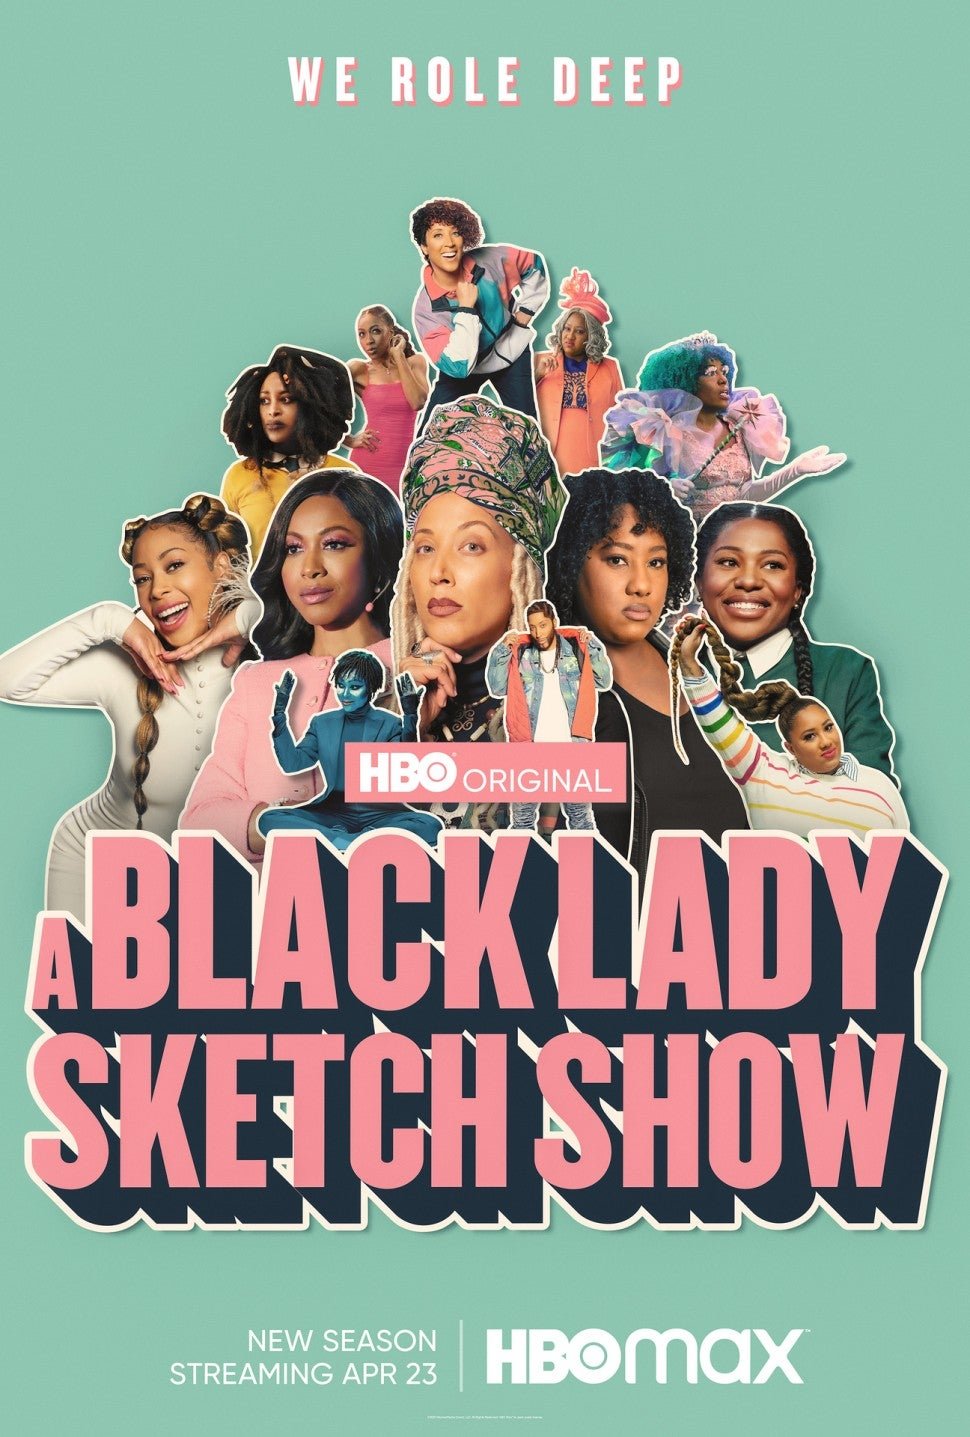 a black lady sketch show stream